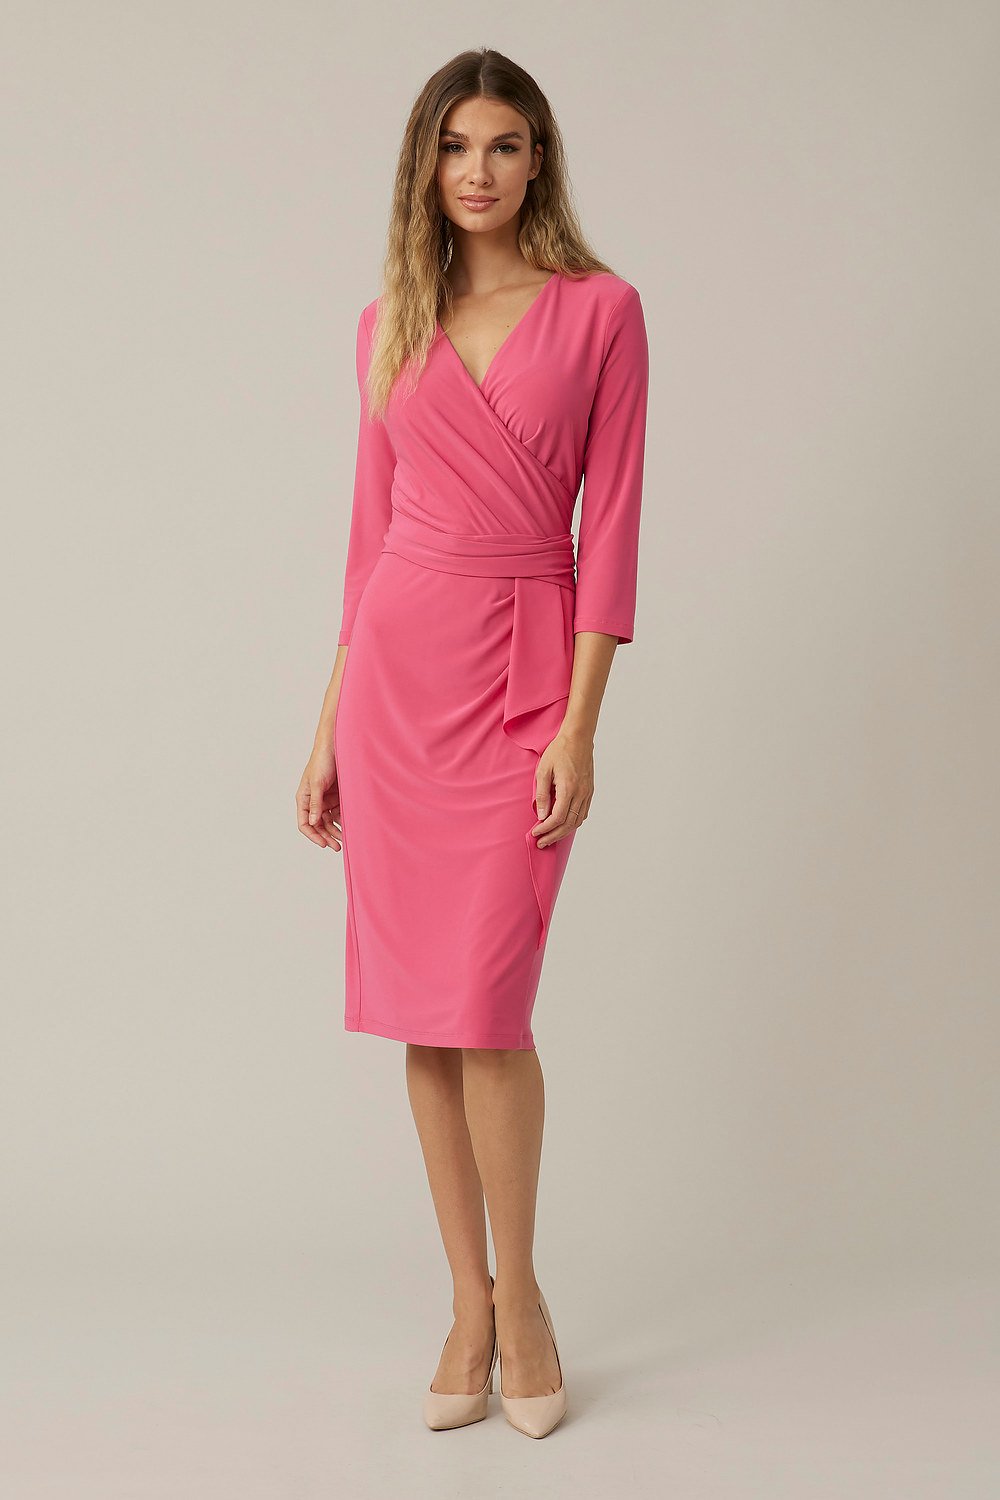 Joseph Ribkoff Wrap Front Dress Style 221162. Raspberry Sorbet